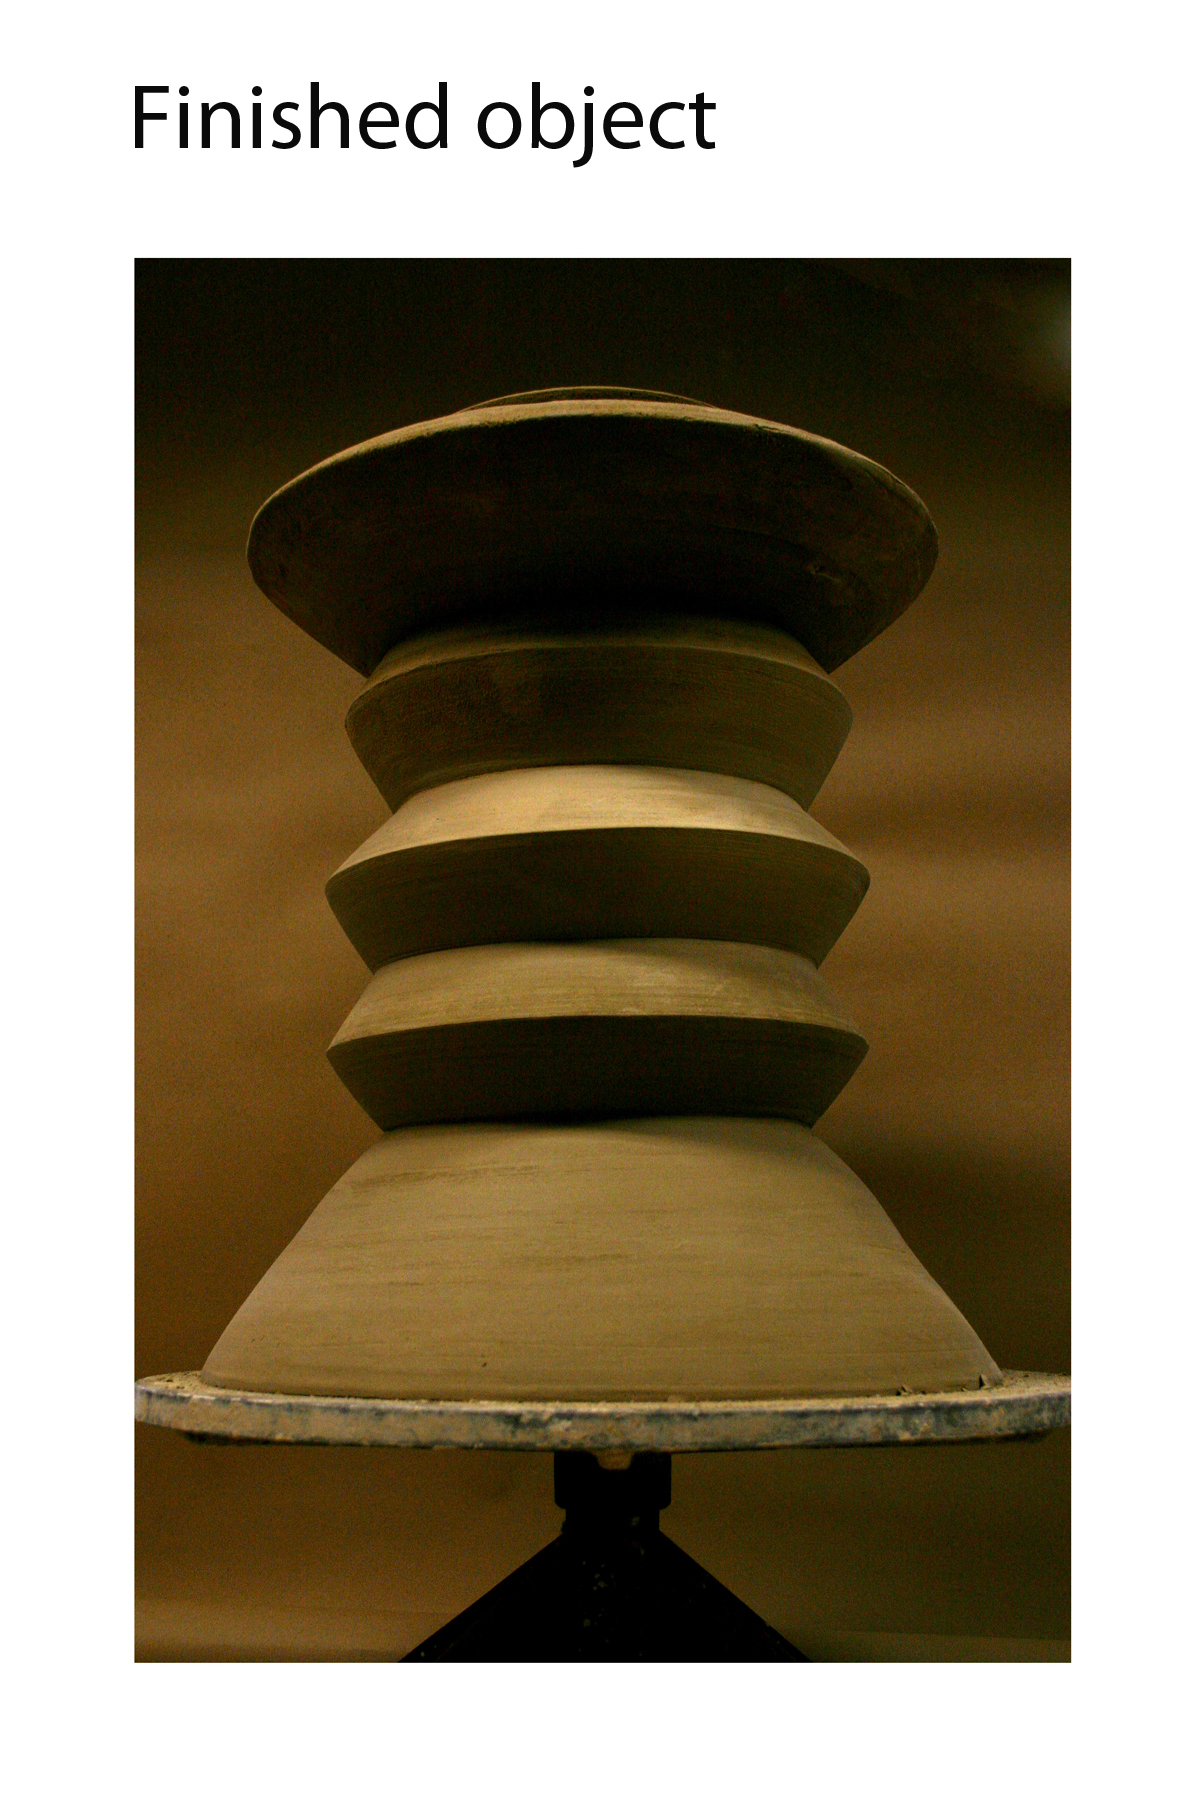 bird water garden ceramic design Pottery bowl dishes handmade